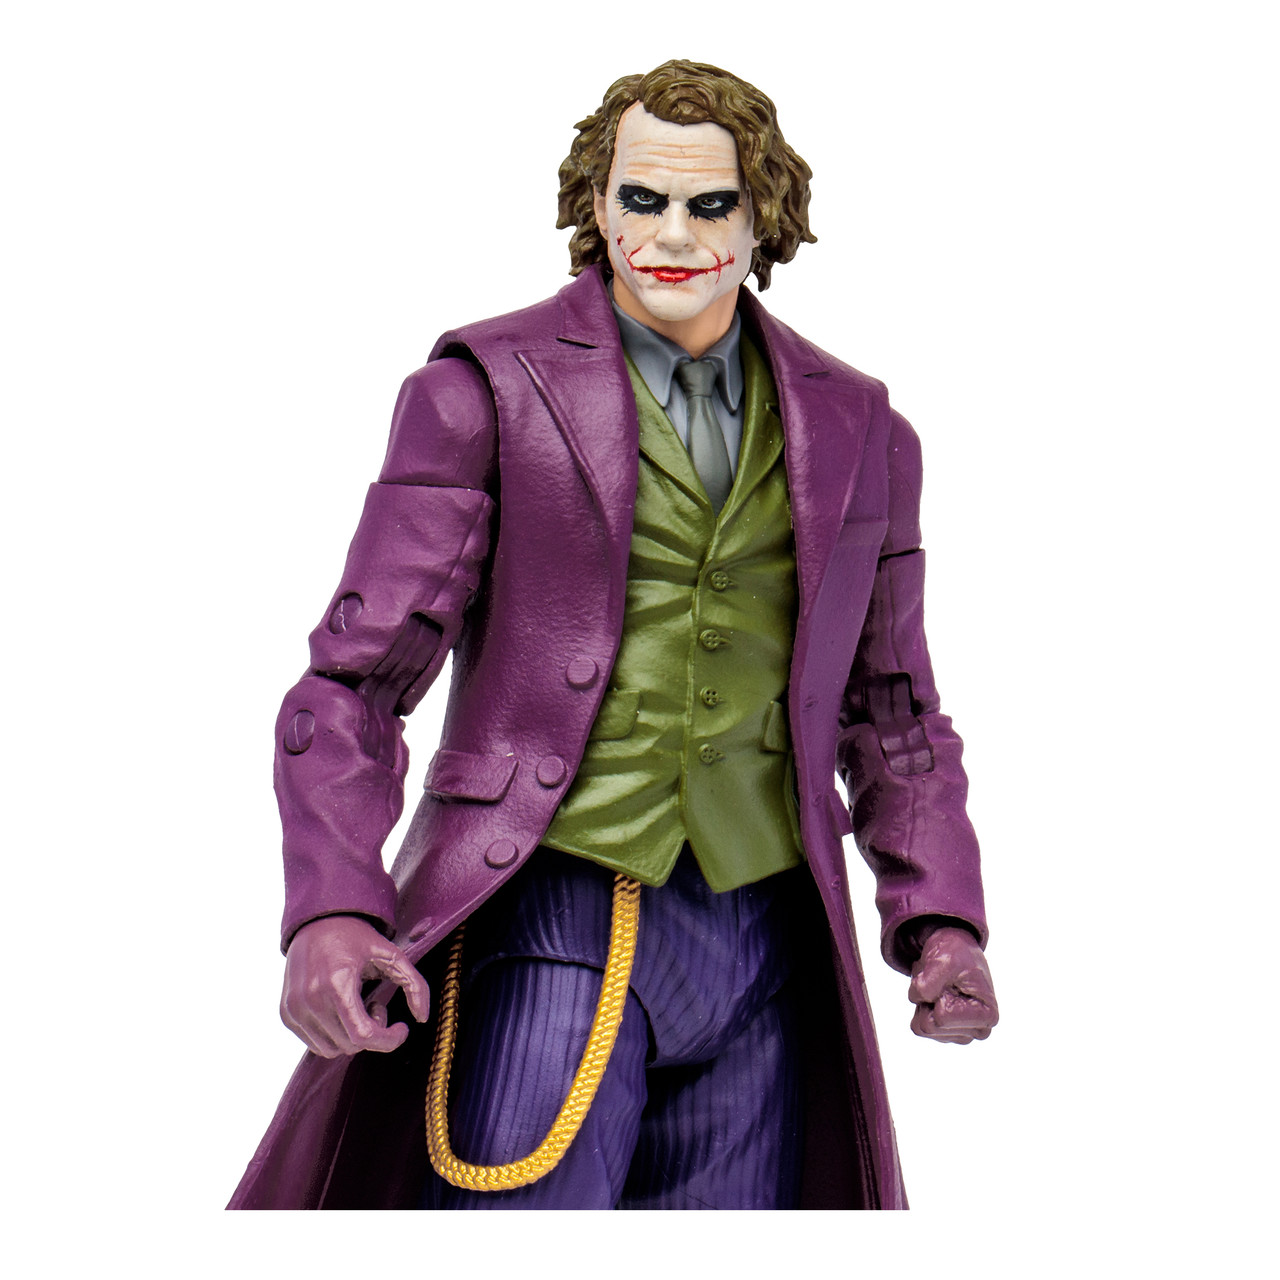 The Joker (The Dark Knight Trilogy) 7